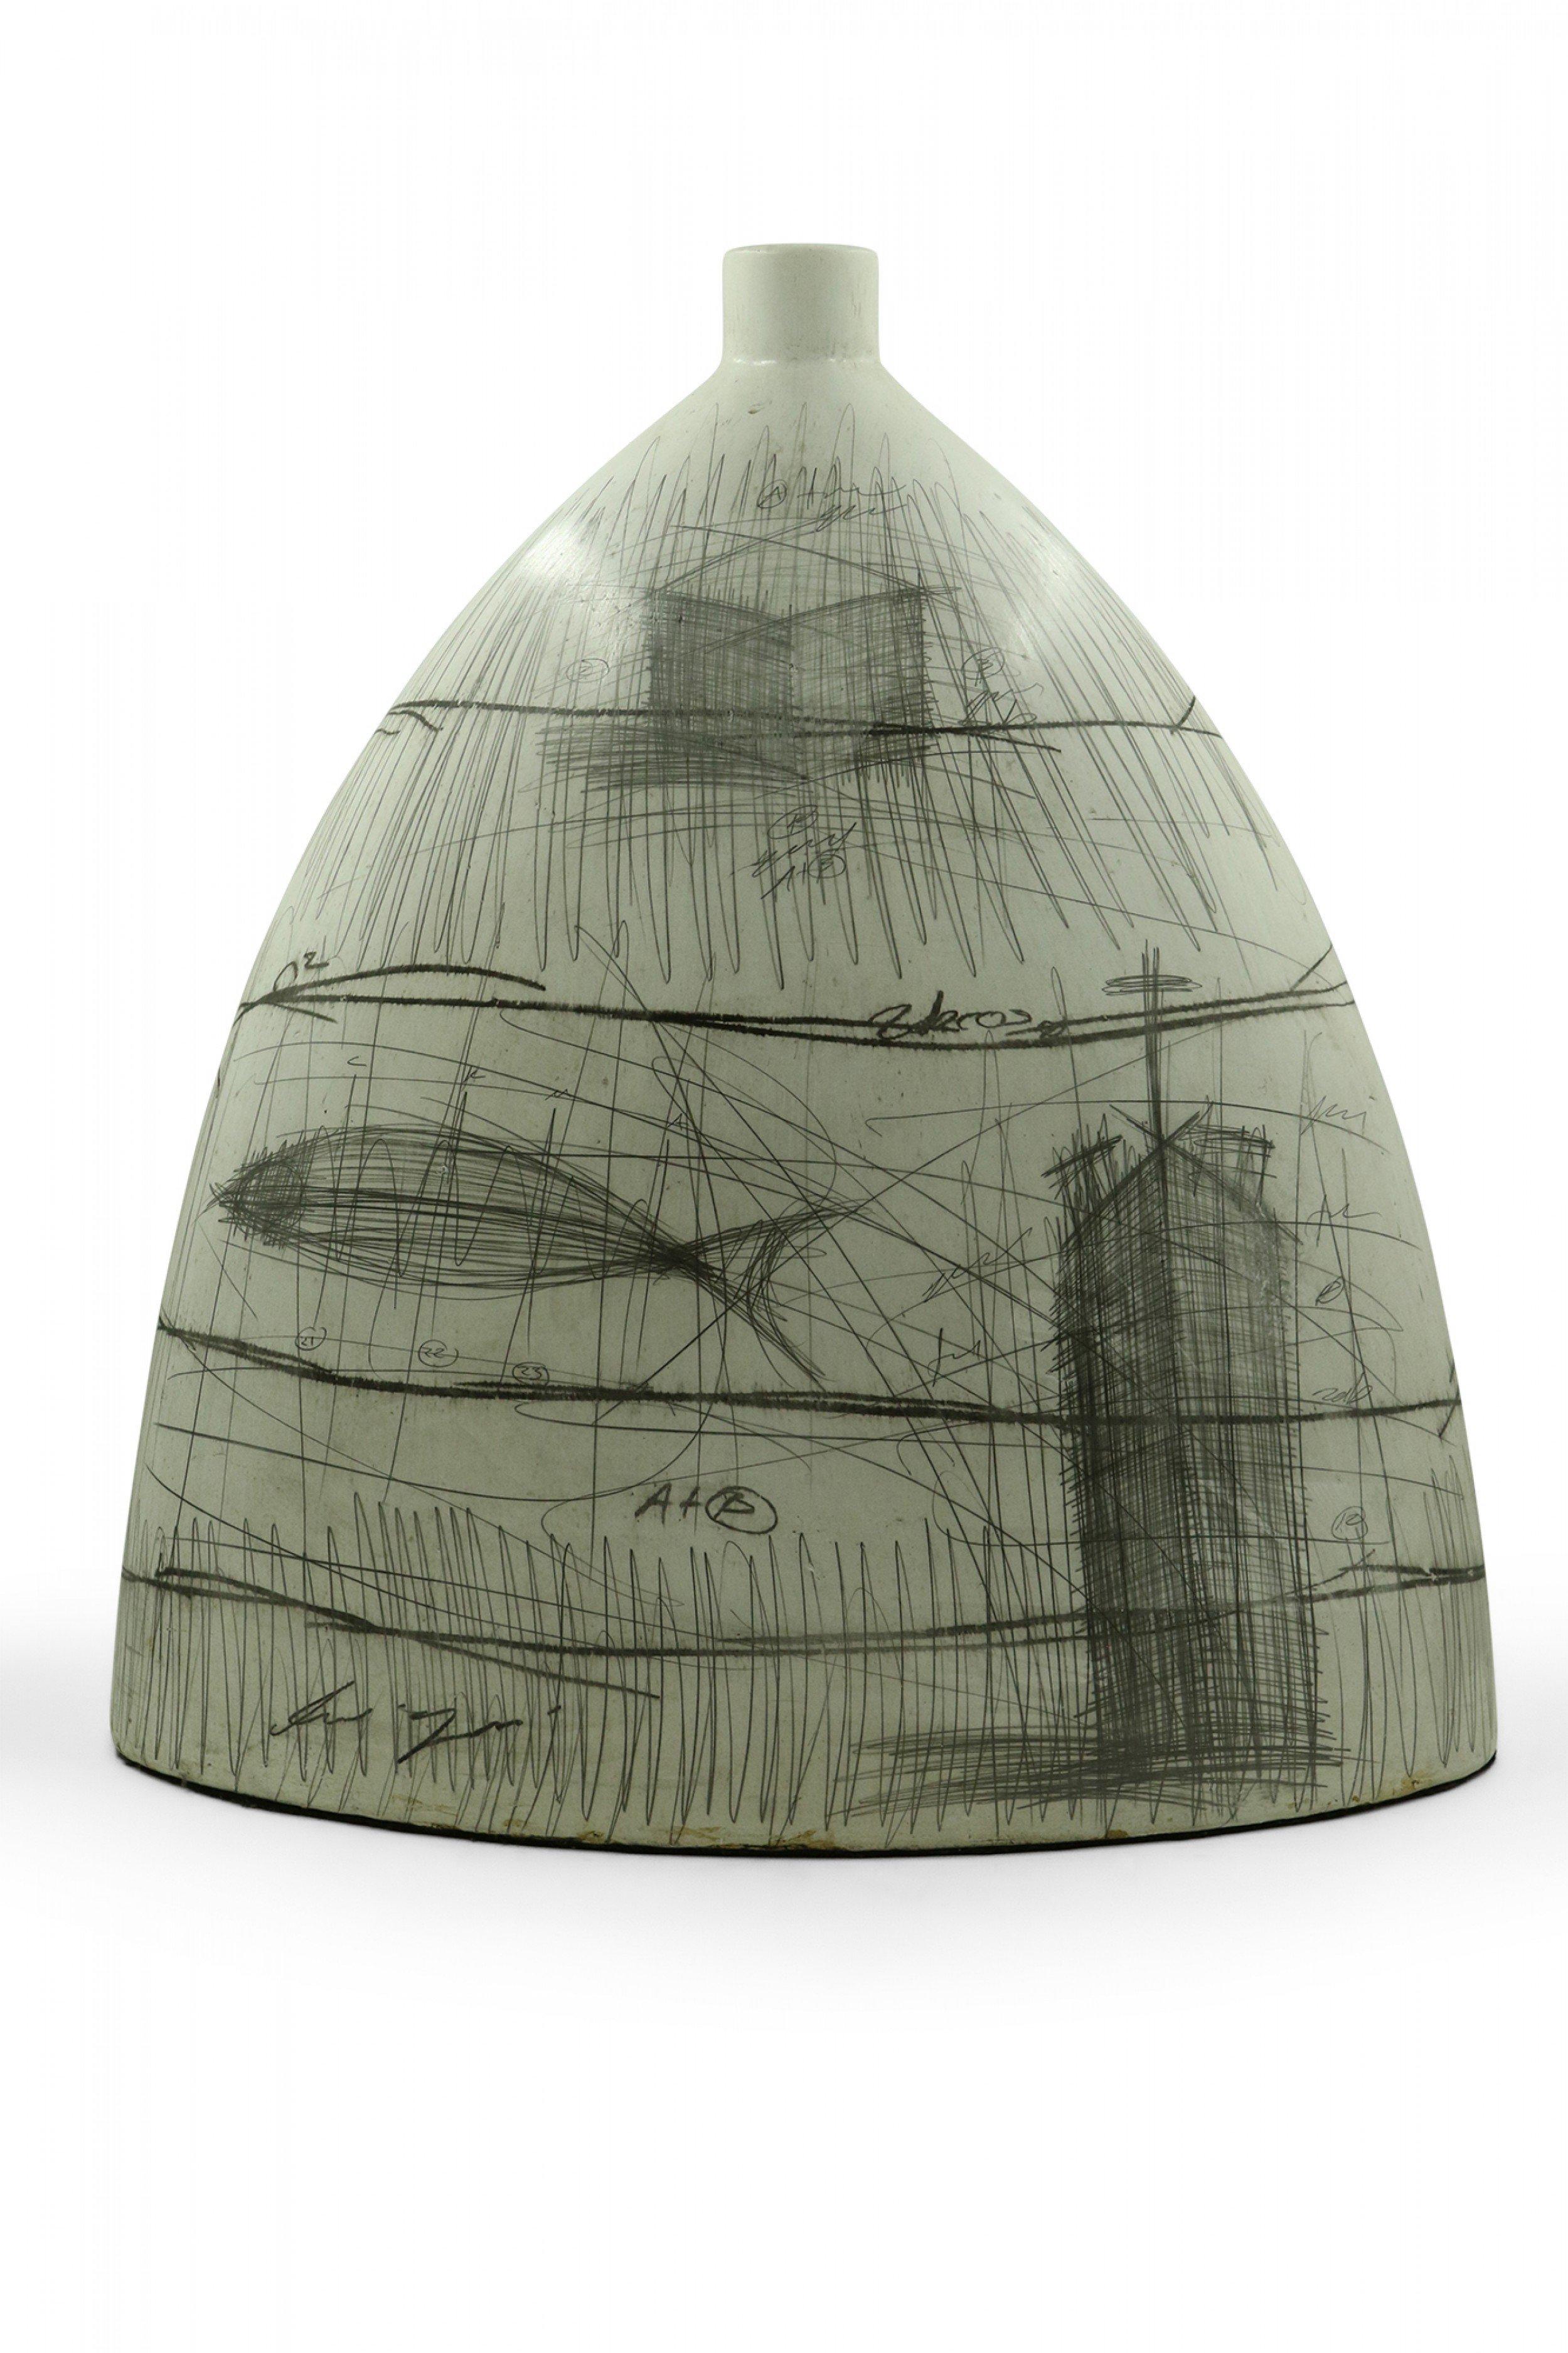 Modern Yuri Zatarain Contemporary Beige Charcoal Equation and Diagram Design Vase For Sale